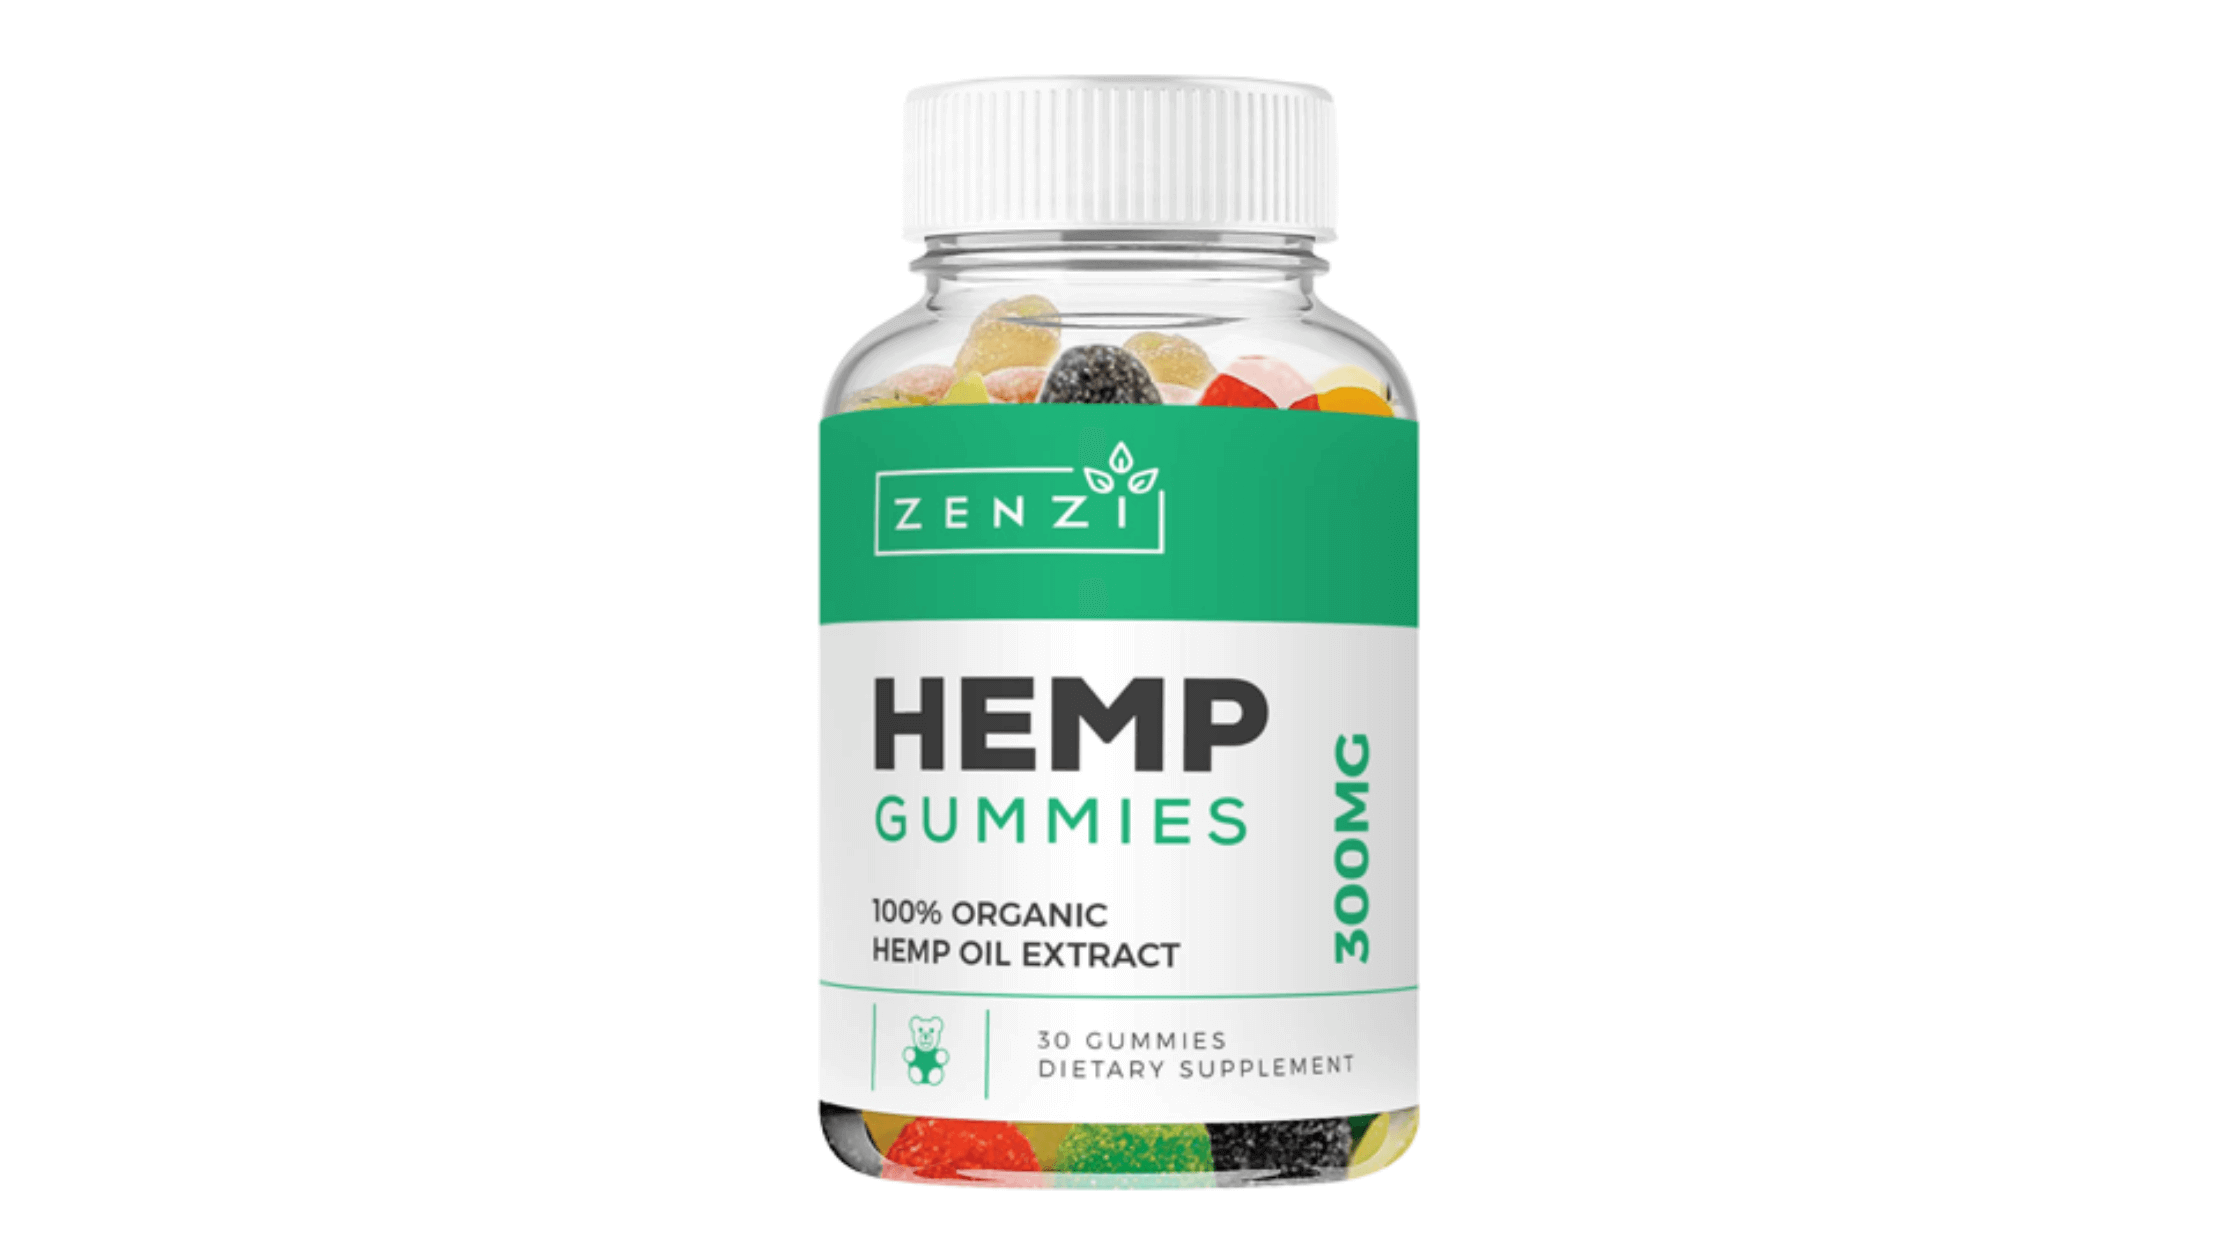 Zenzi Hemp Gummies Reviews